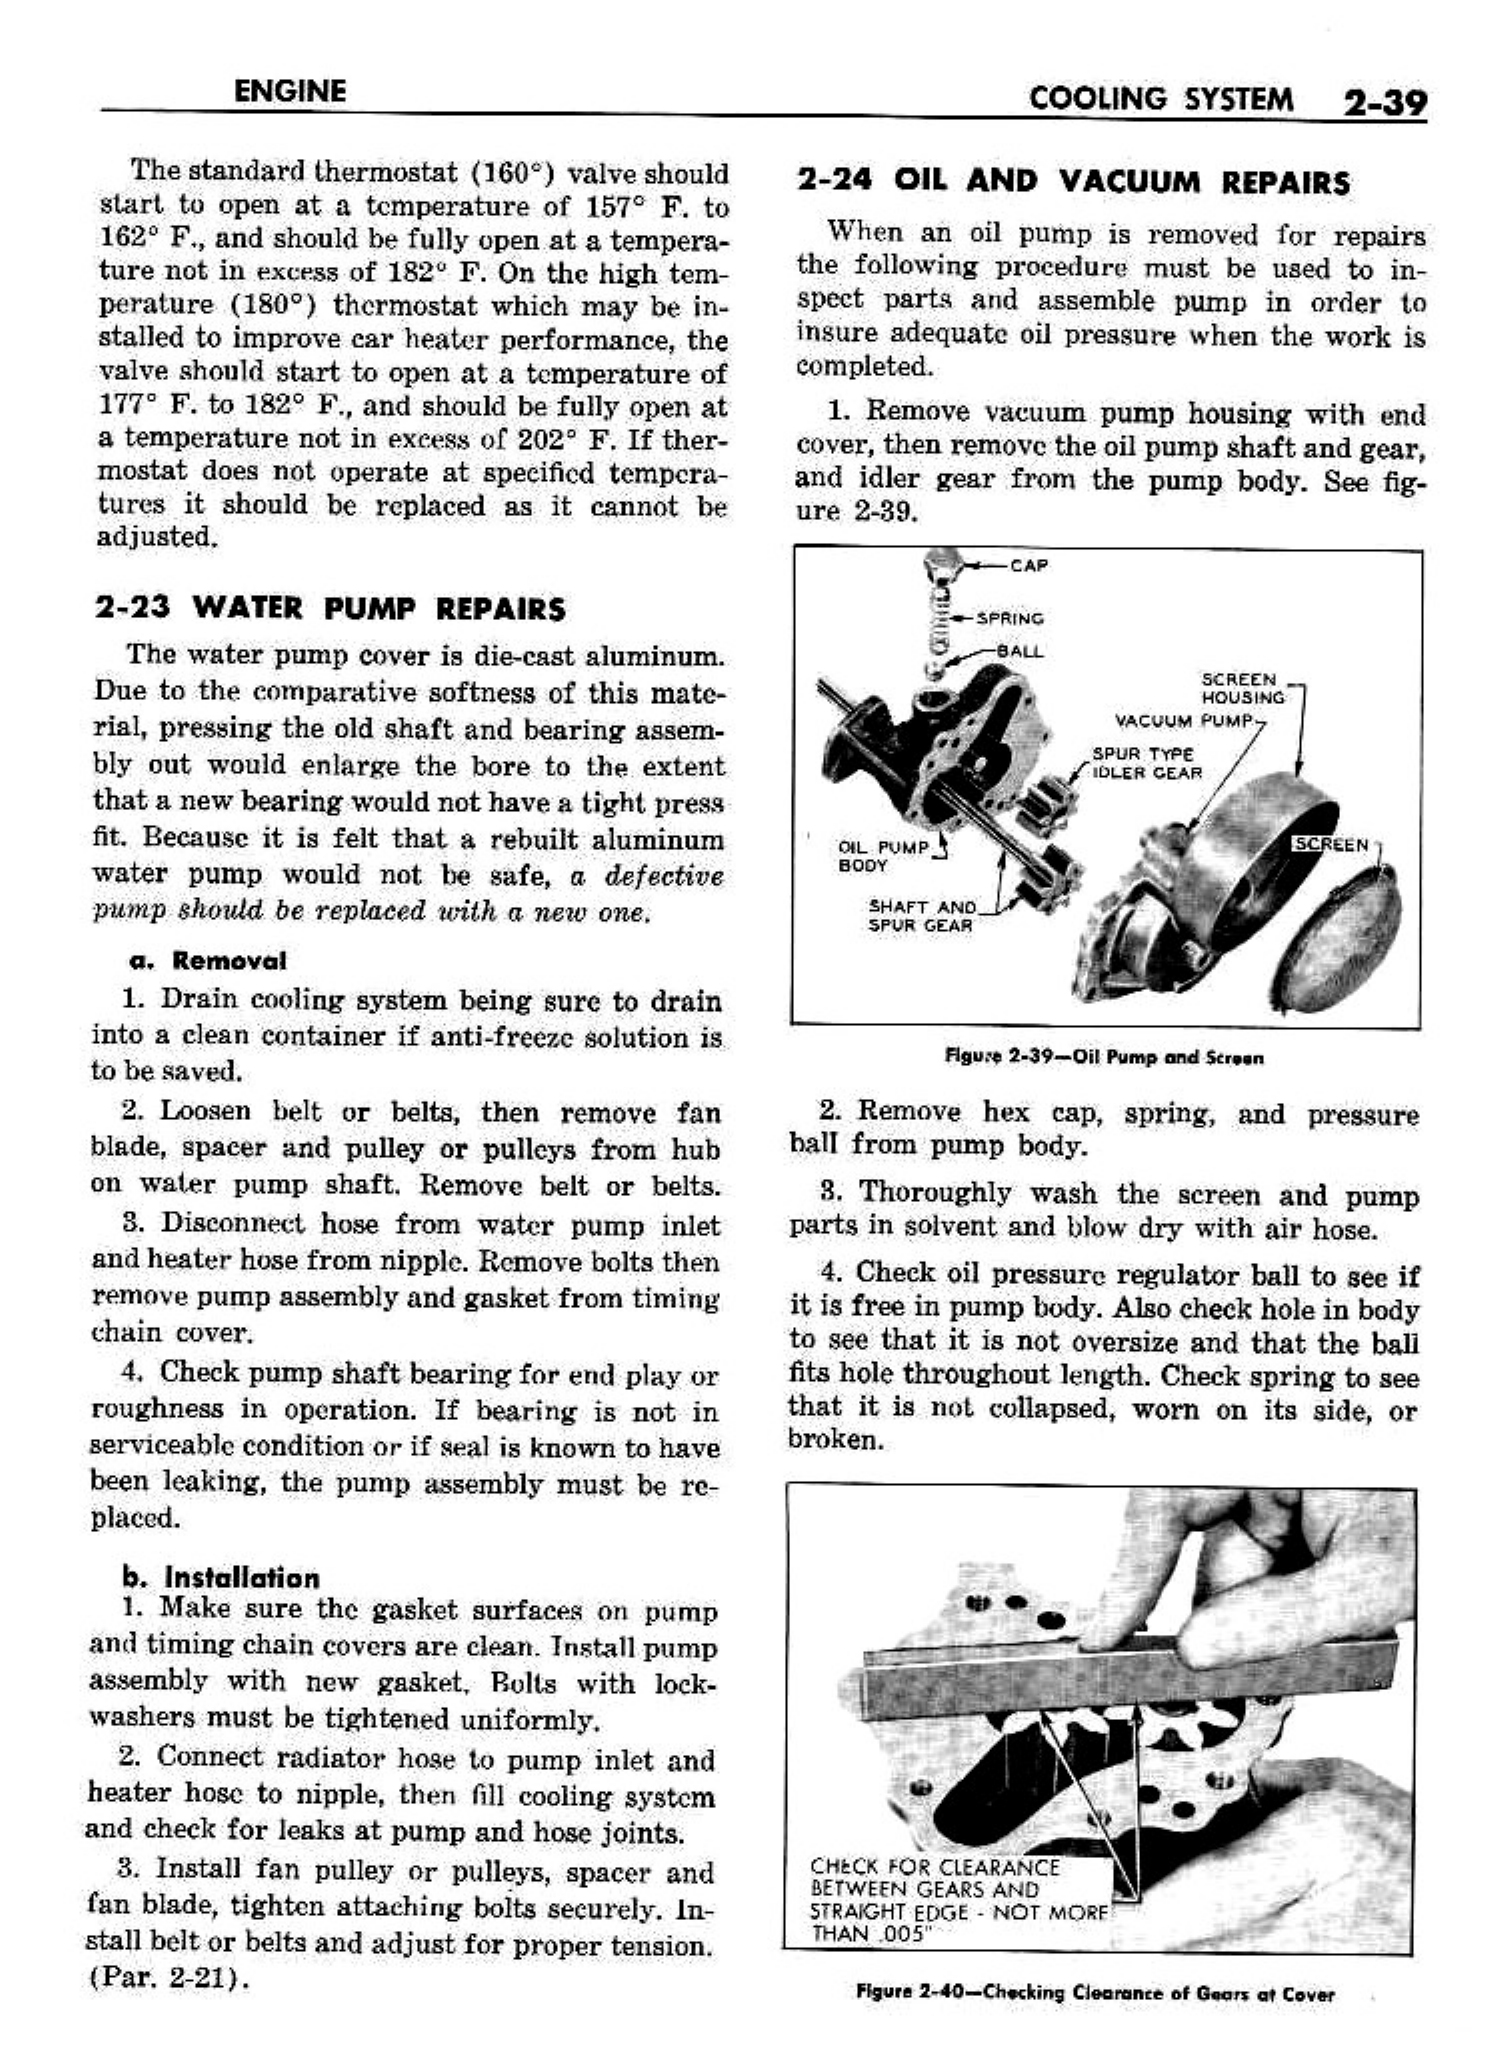 n_03 1958 Buick Shop Manual - Engine_39.jpg